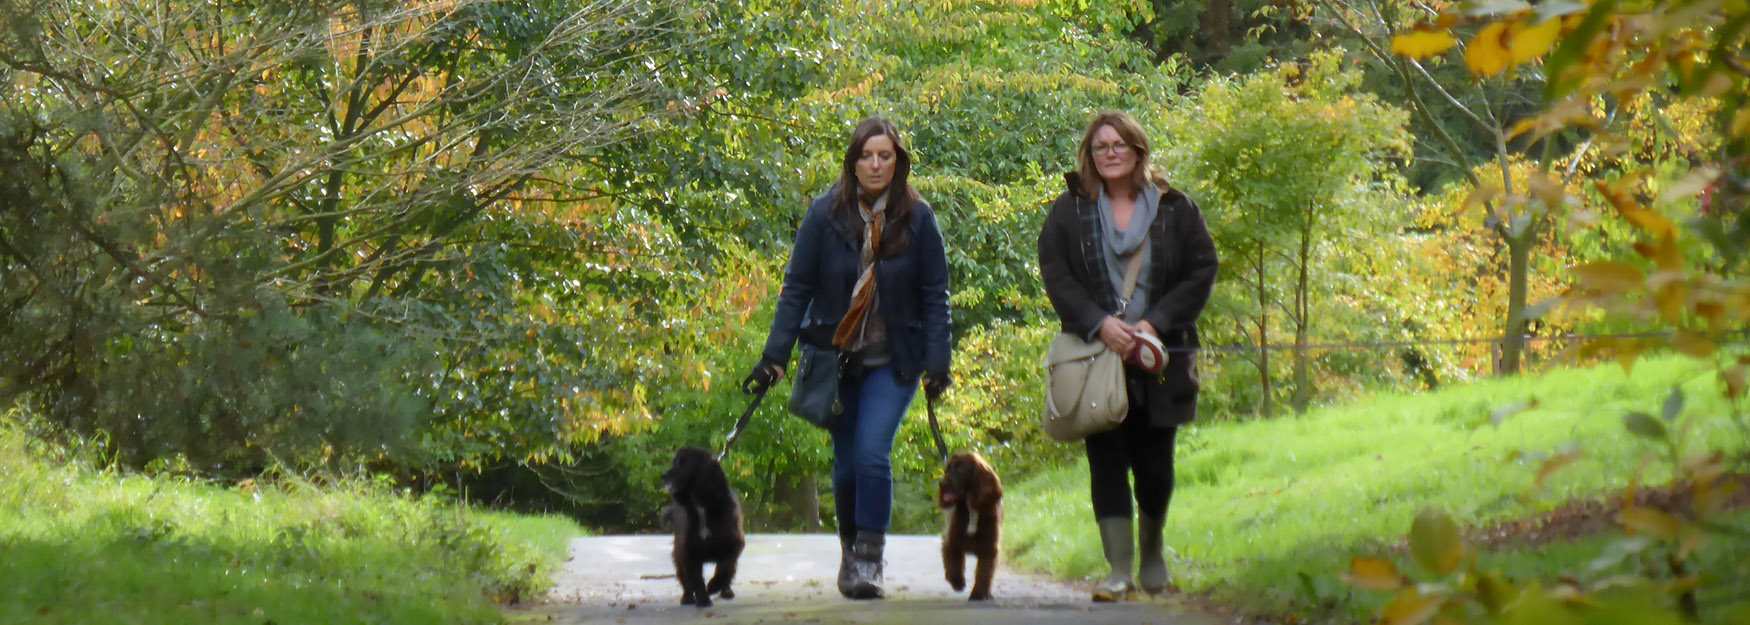 Autumn dog walkers at Batsford Arboretum